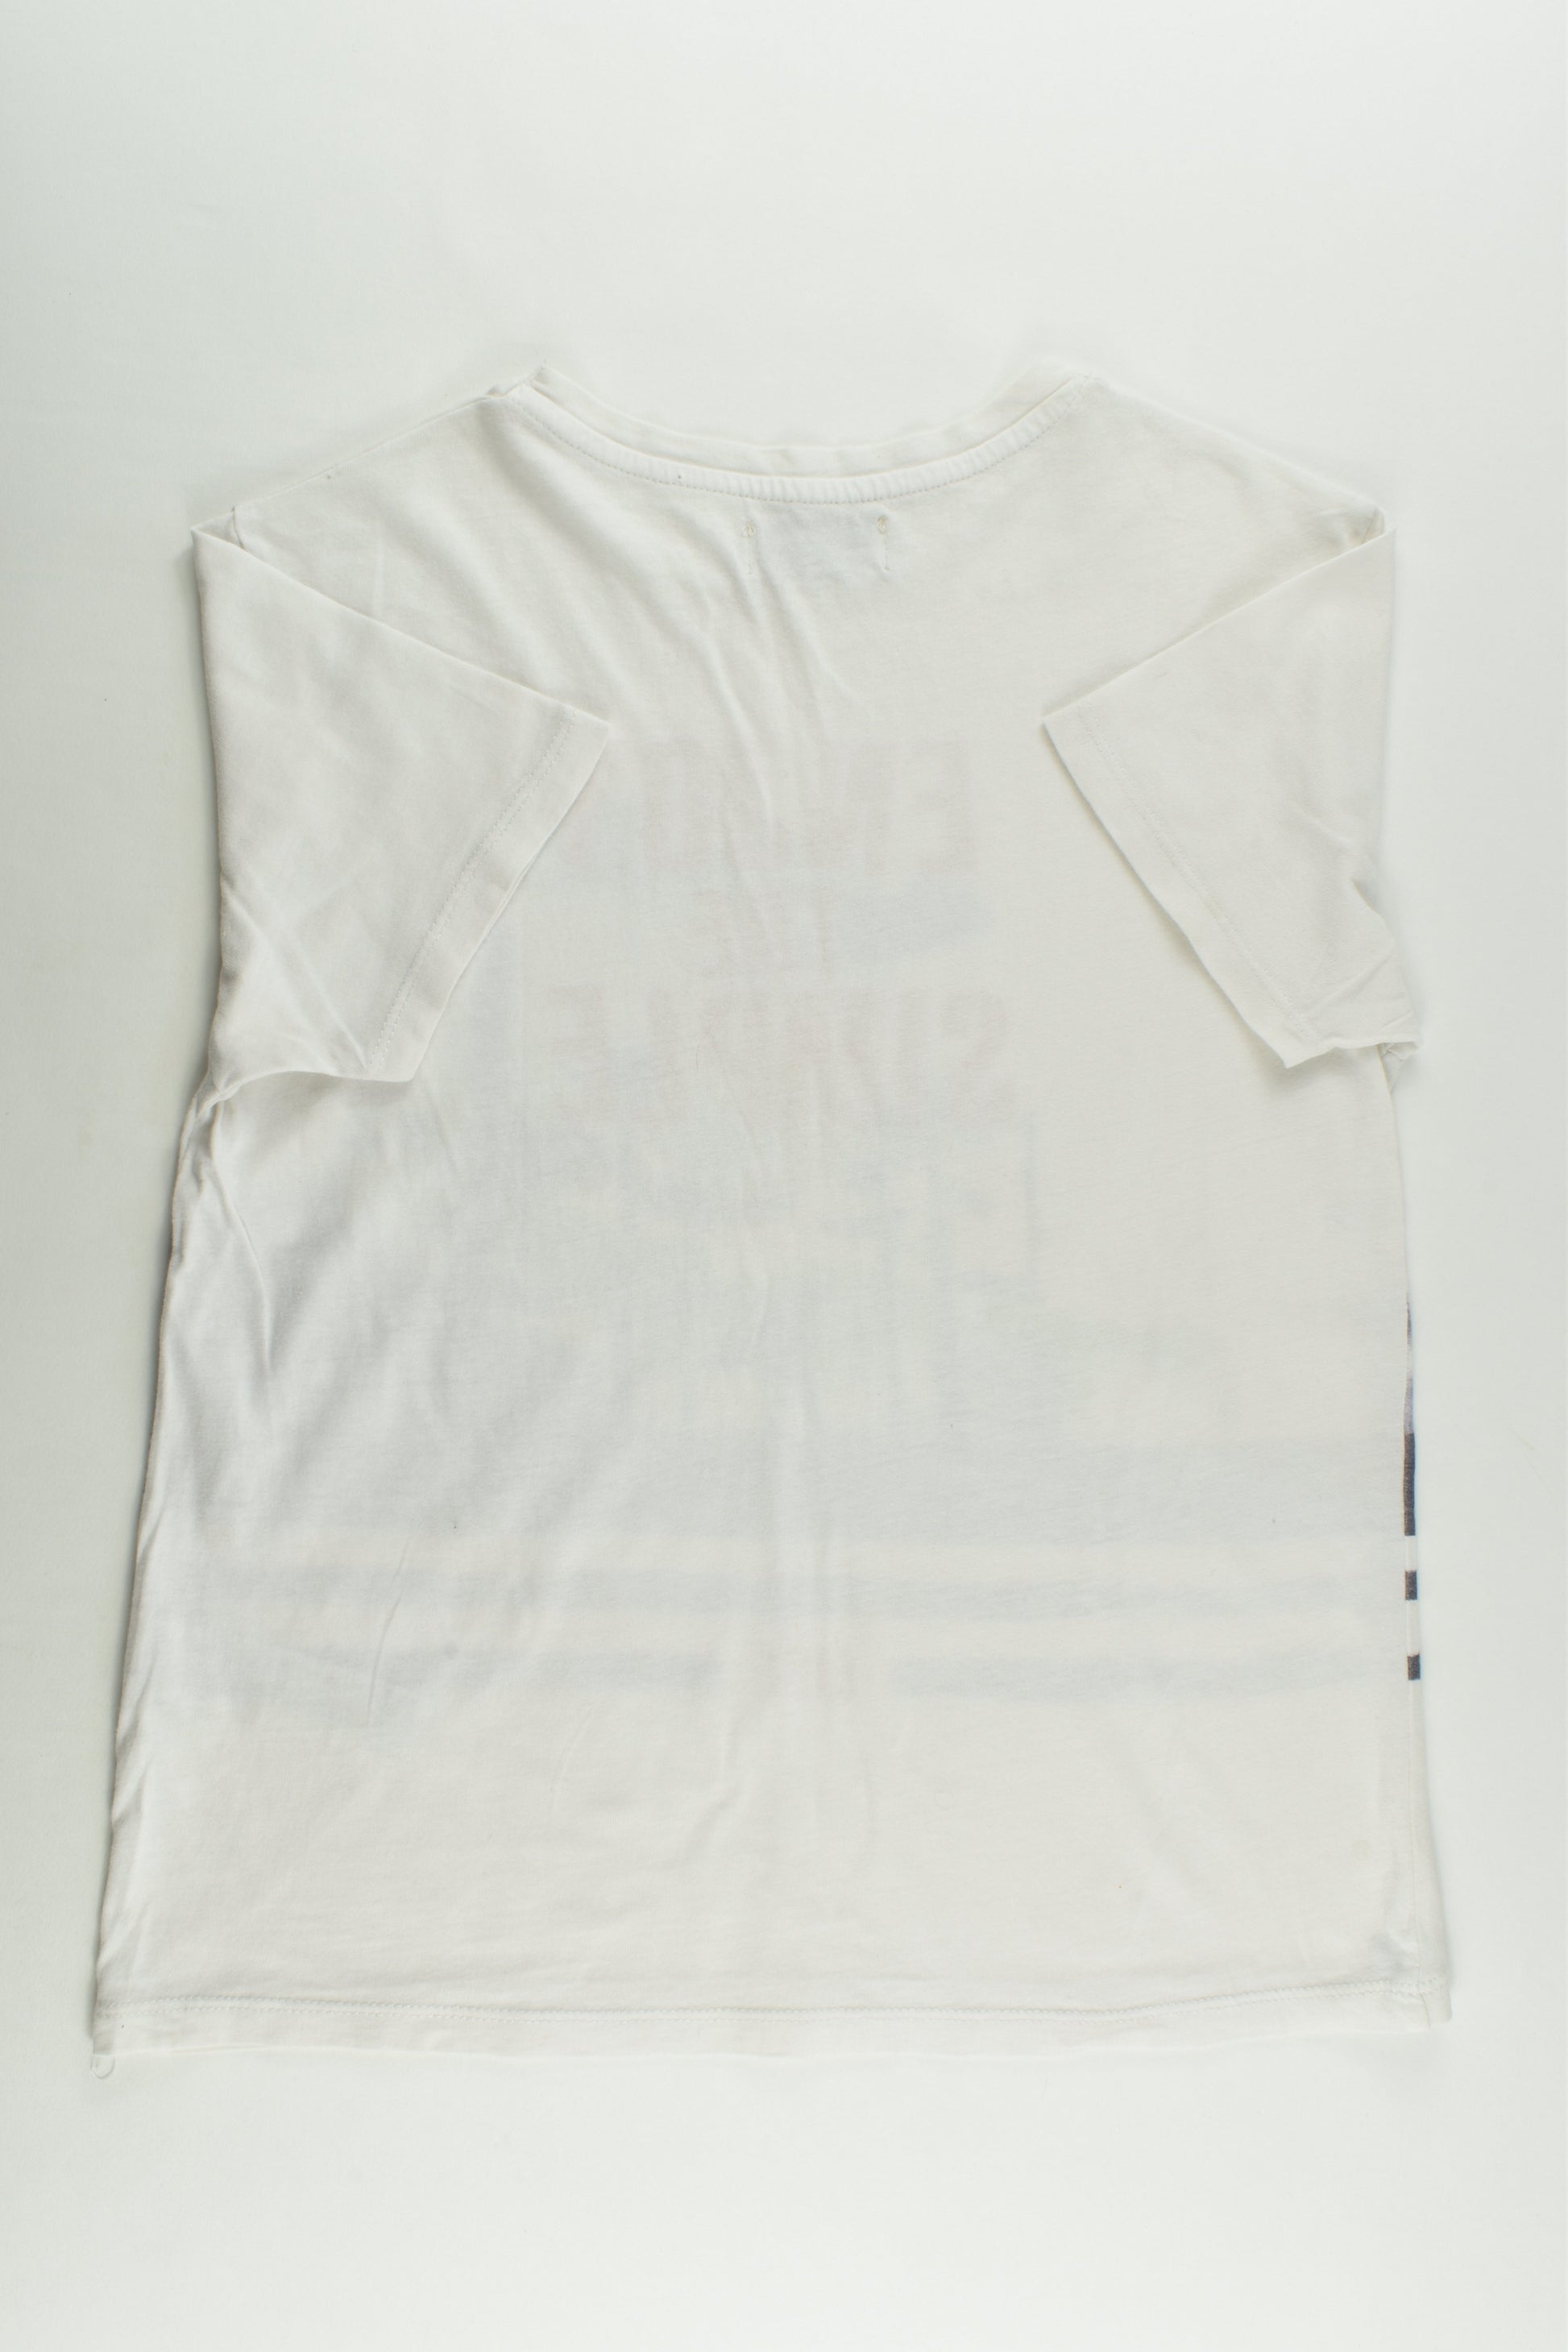 Zara Size 7 (122 cm) 'Enjoy The Simple Life' T-shirt